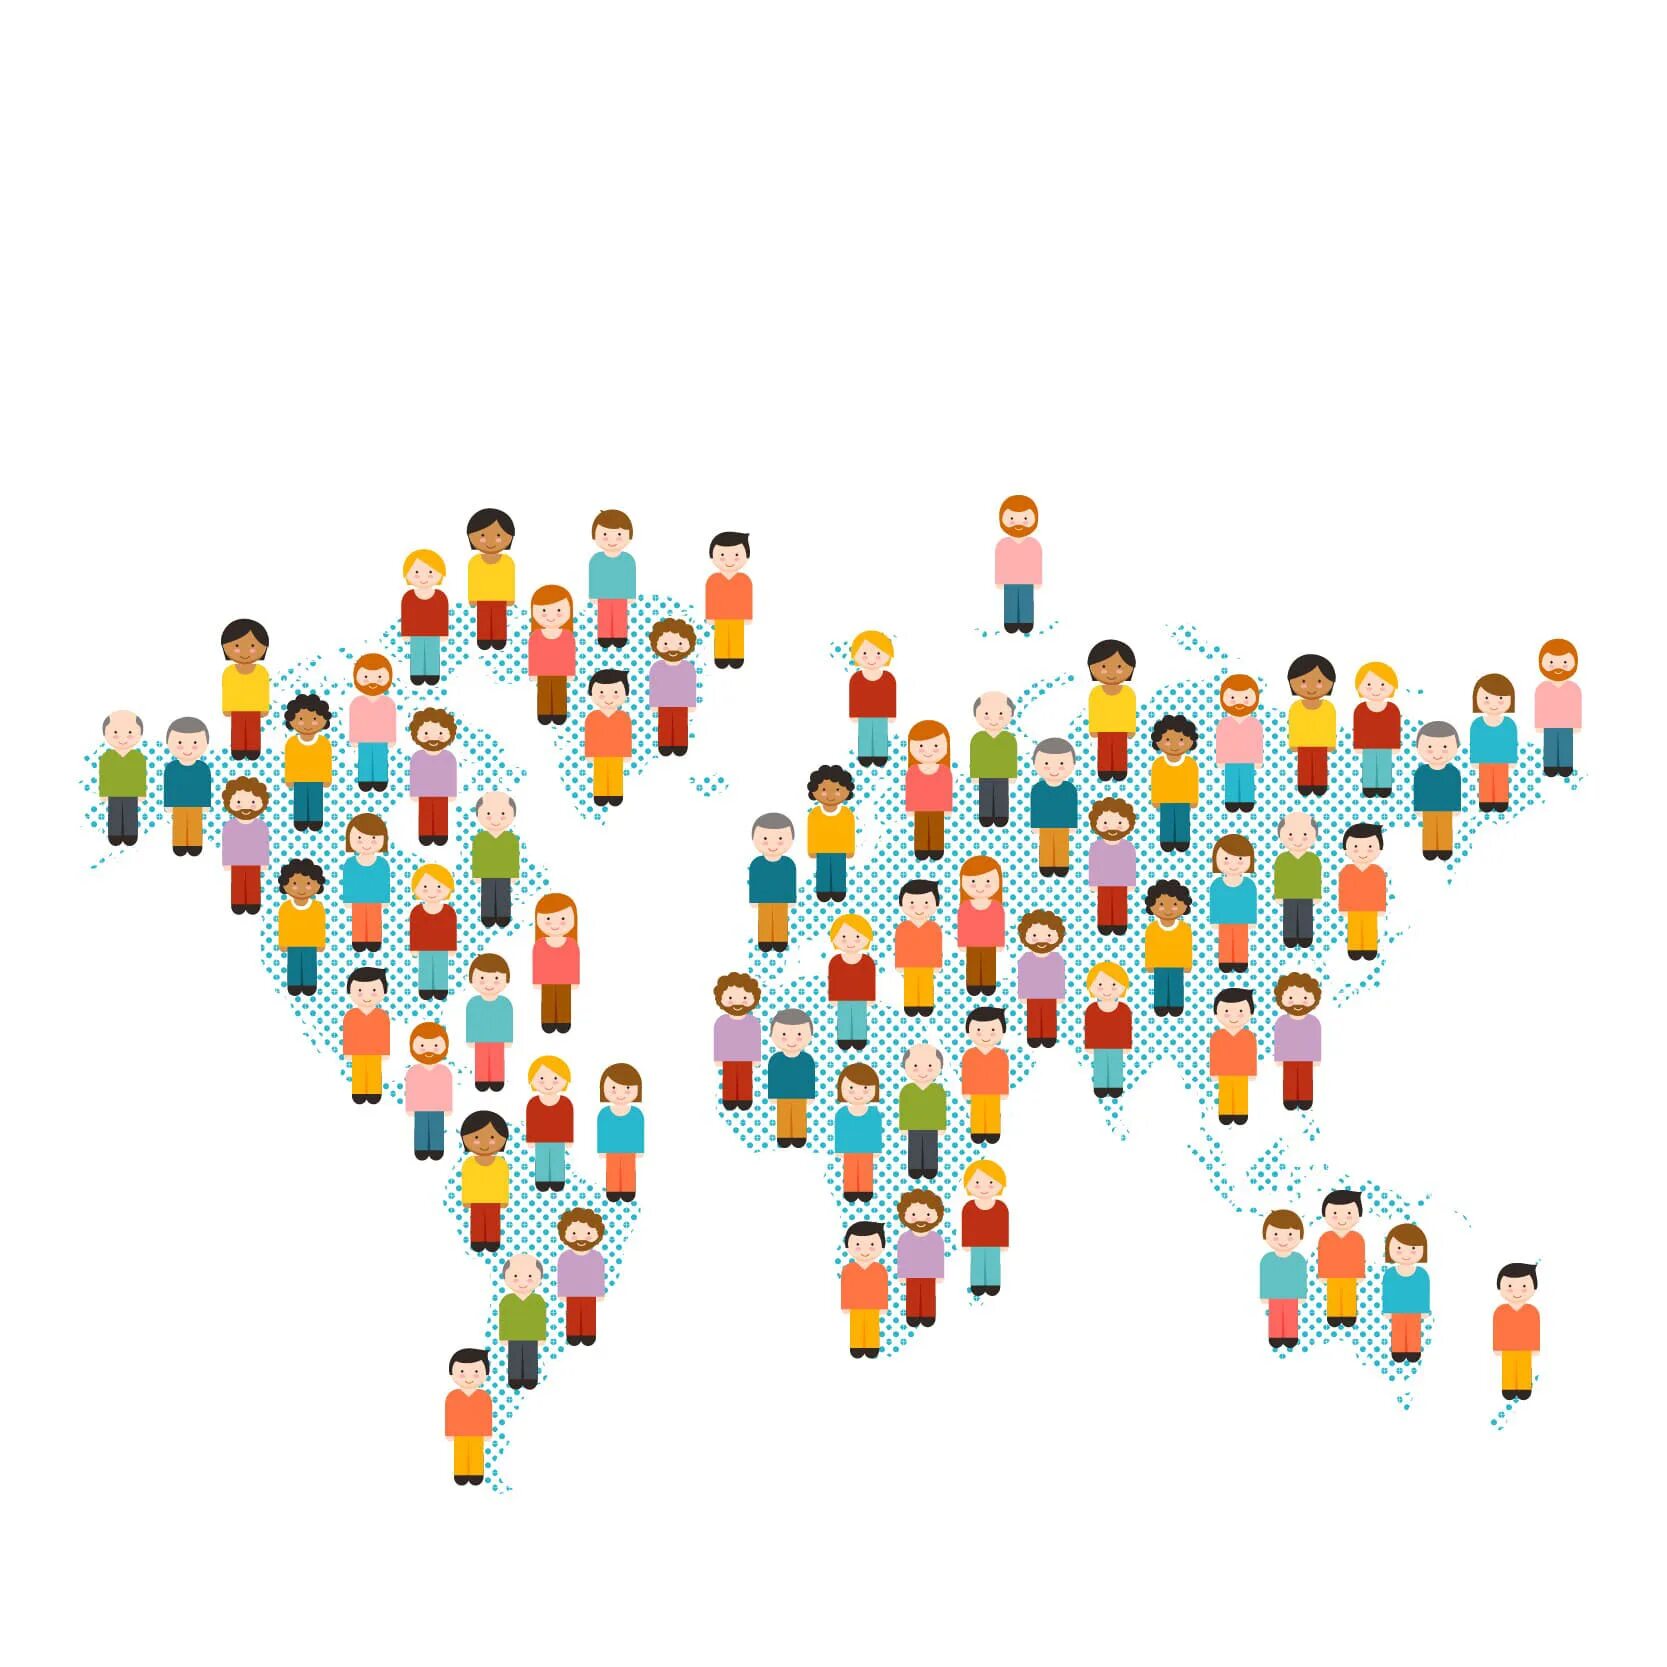 World people population. Население картинки. Население земли. Народонаселение картинки. Демография картинки.